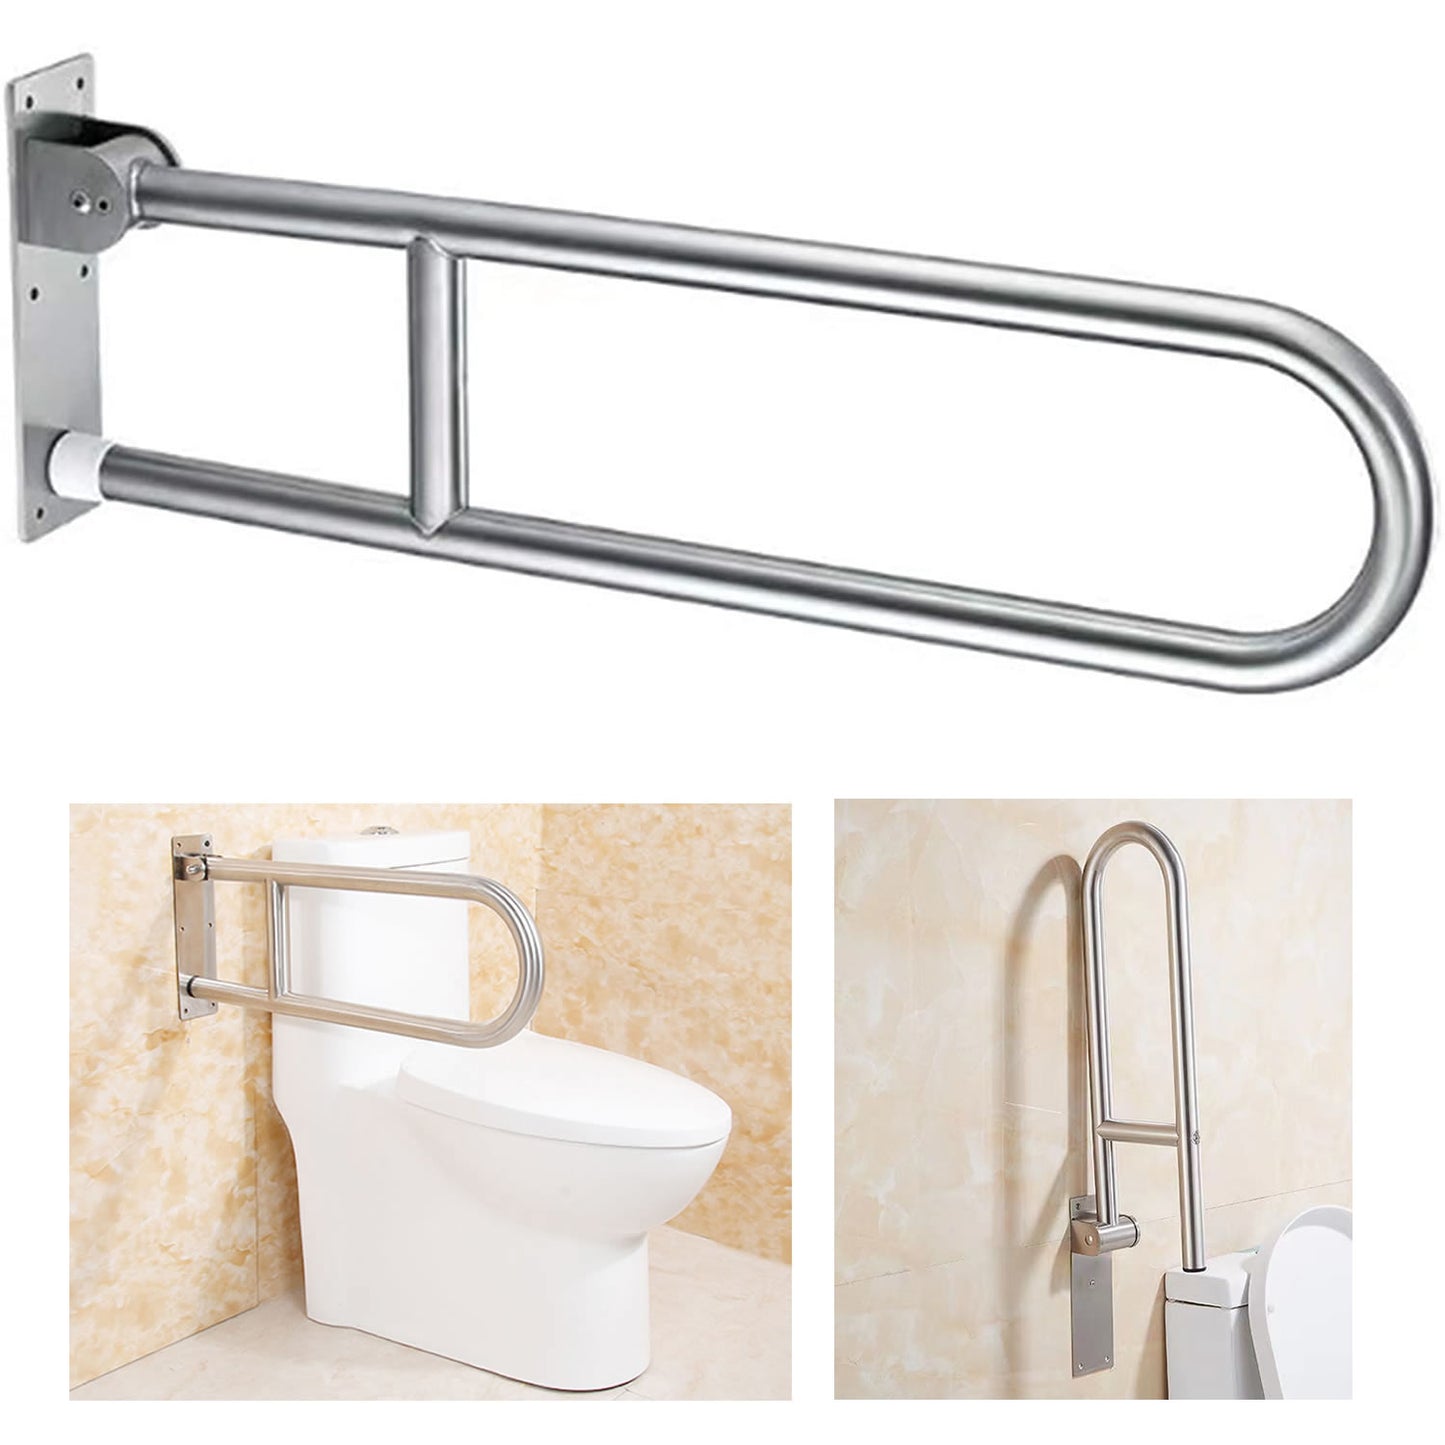 Flip Up Bathroom Toilet Grab Bar, Wall Mount Handrails Stainless Steel Handicap